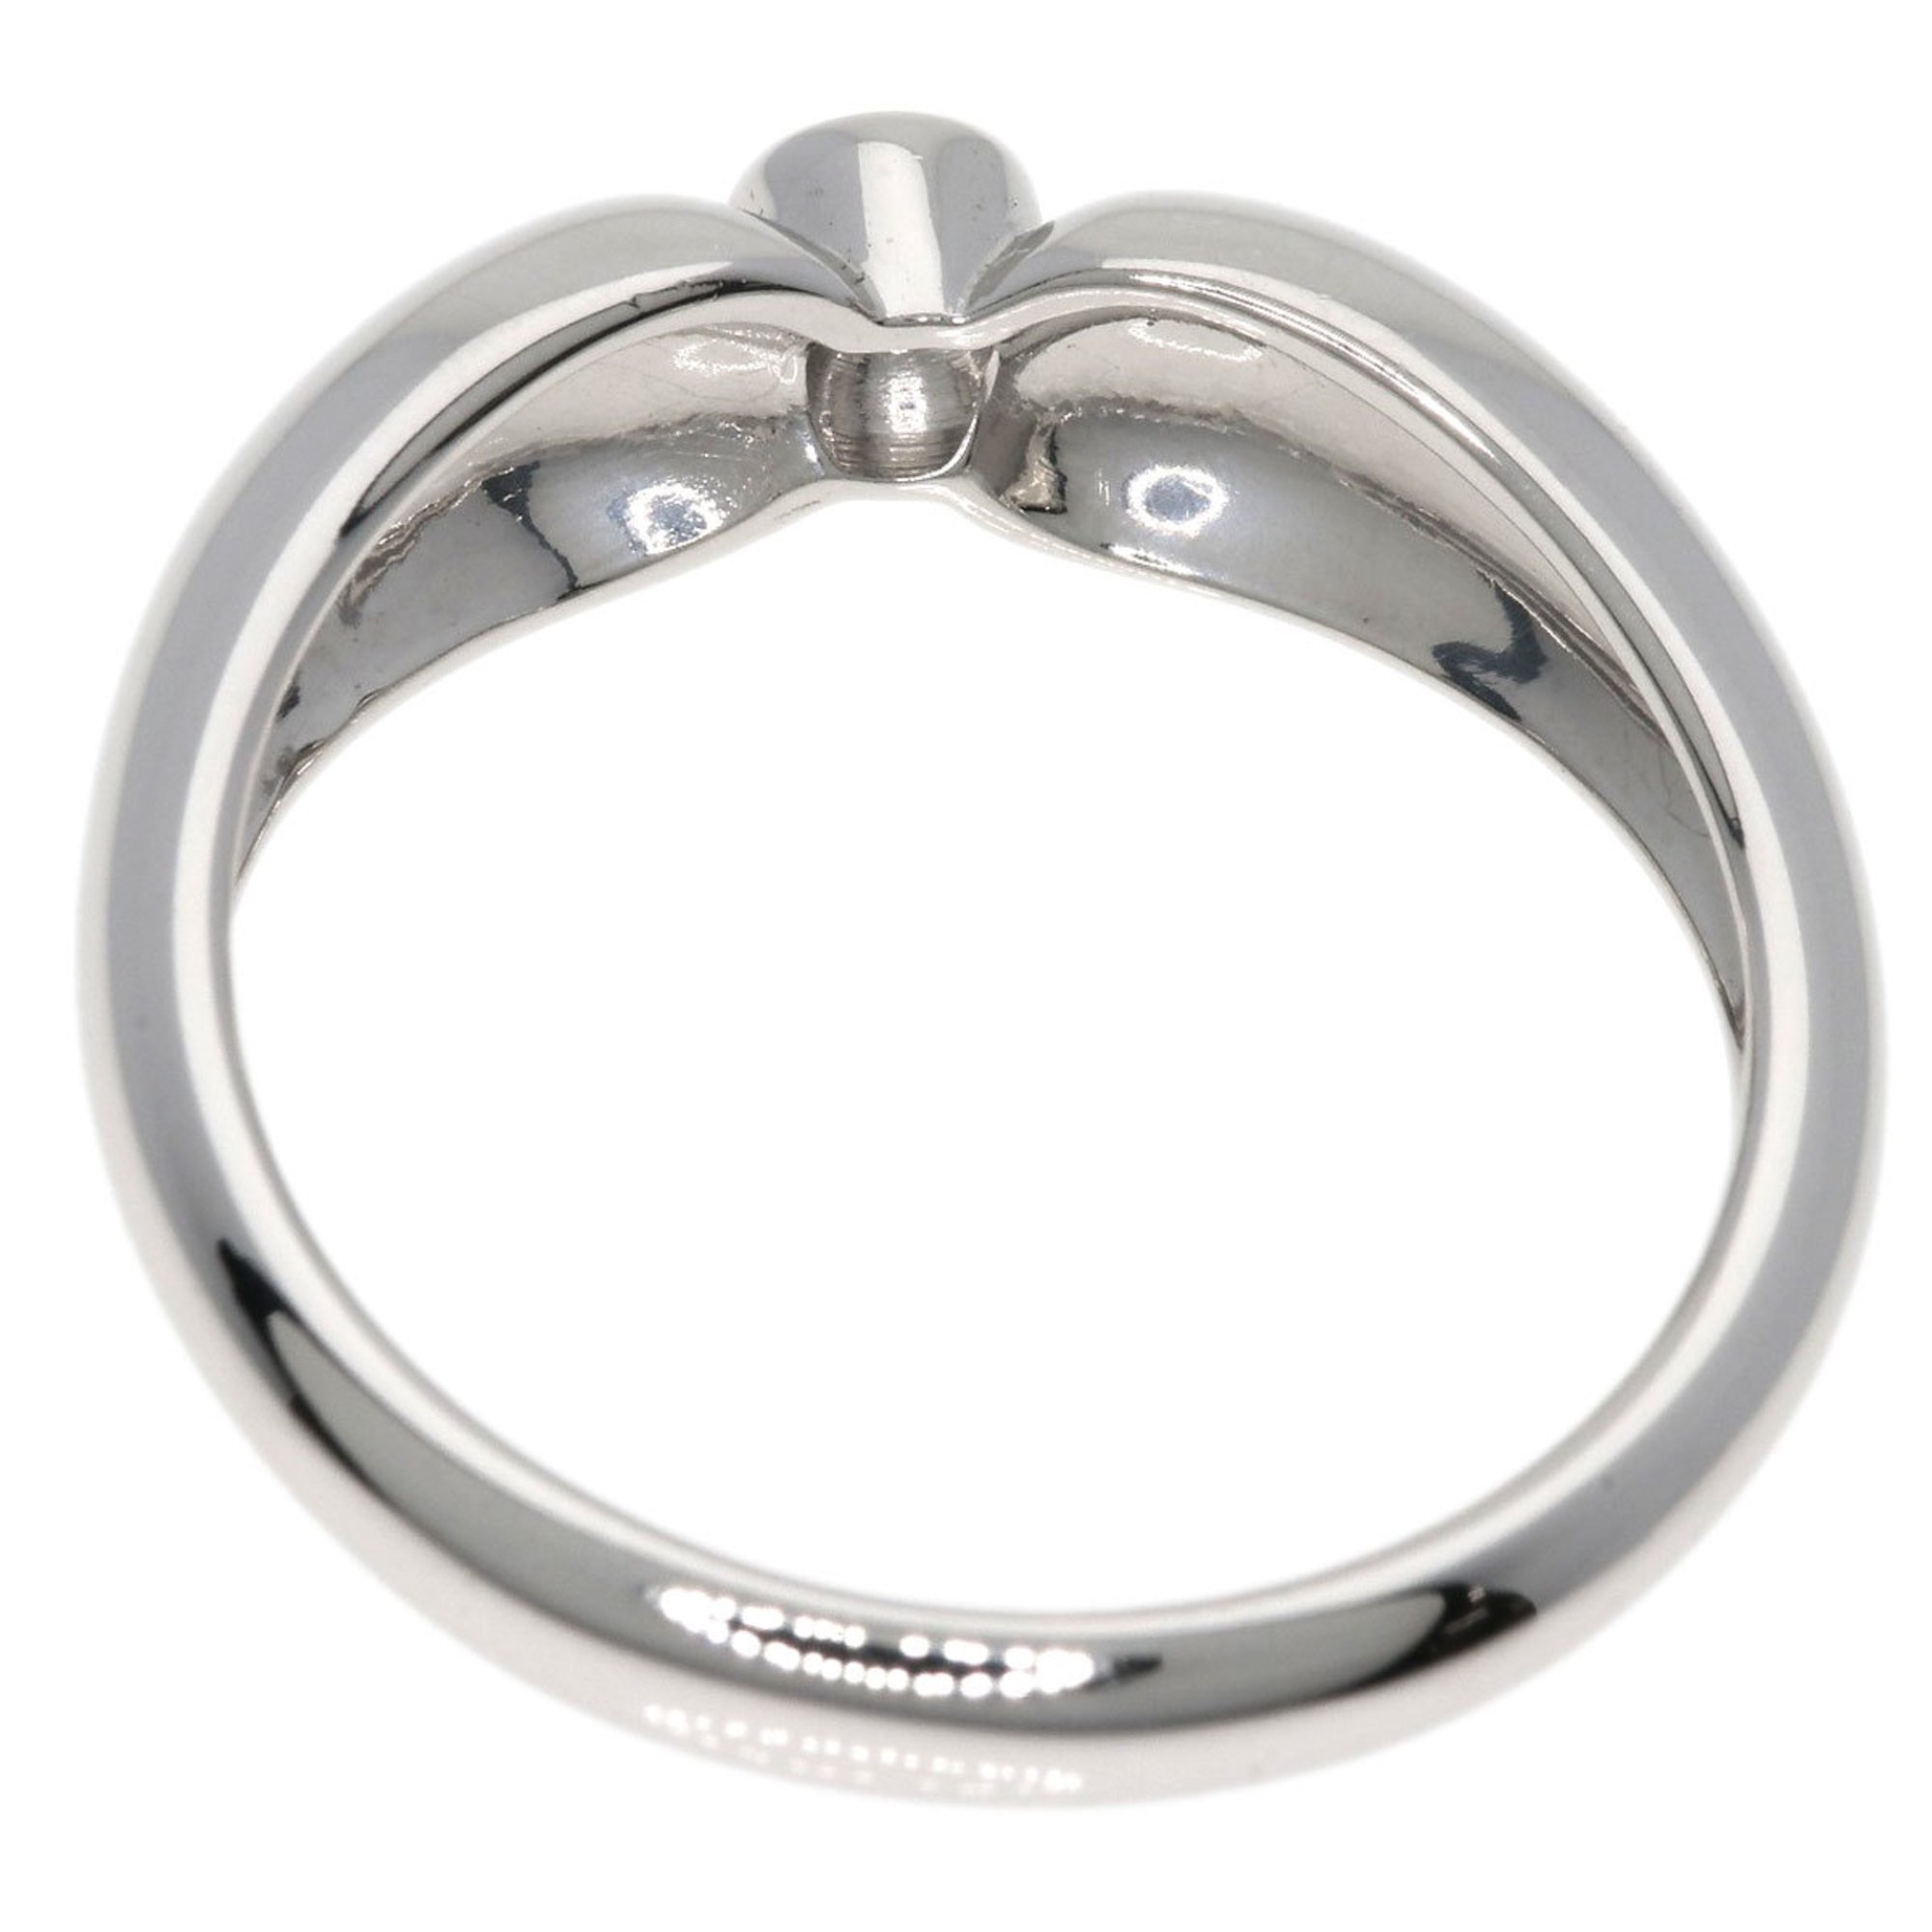 Tiffany Double Teardrop 1P Diamond Ring, Platinum PT950, Women's